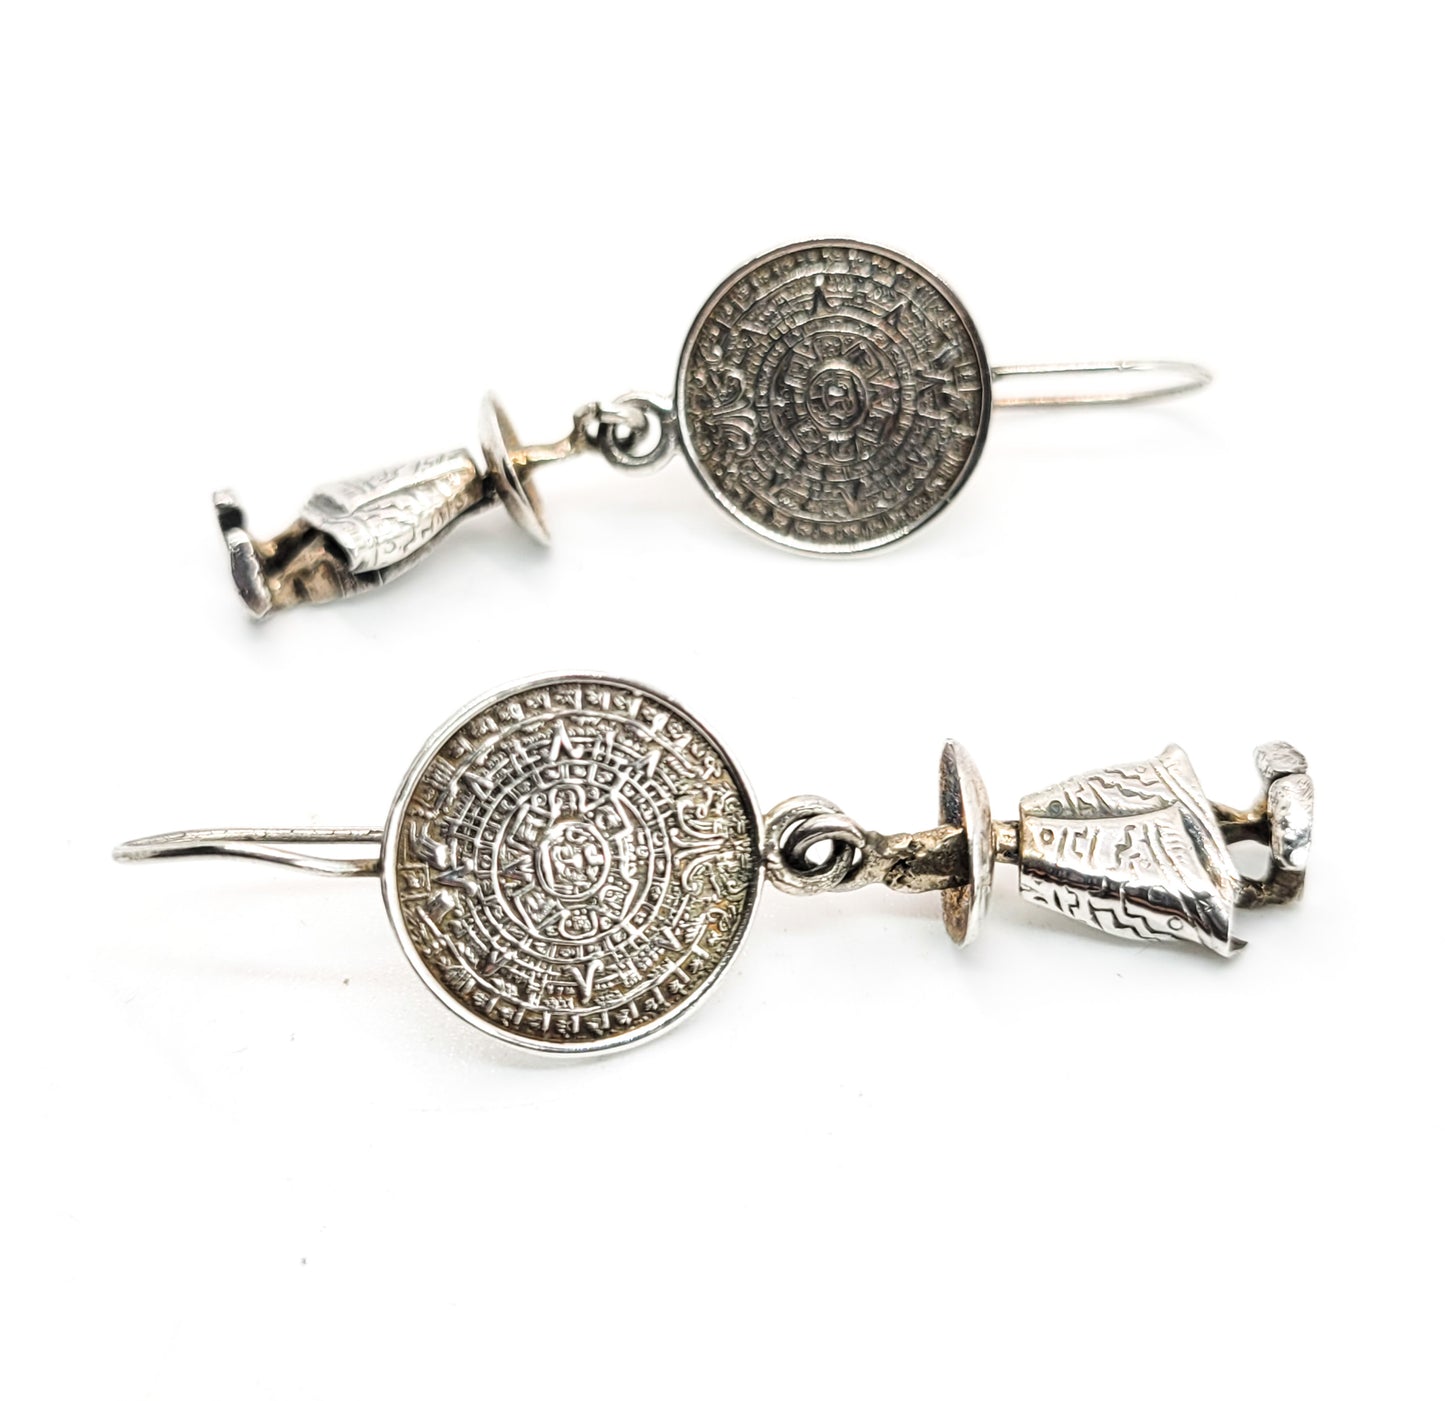 Aztec Mexica calendar sombrero Mexican vintage sterling silver drop earrings